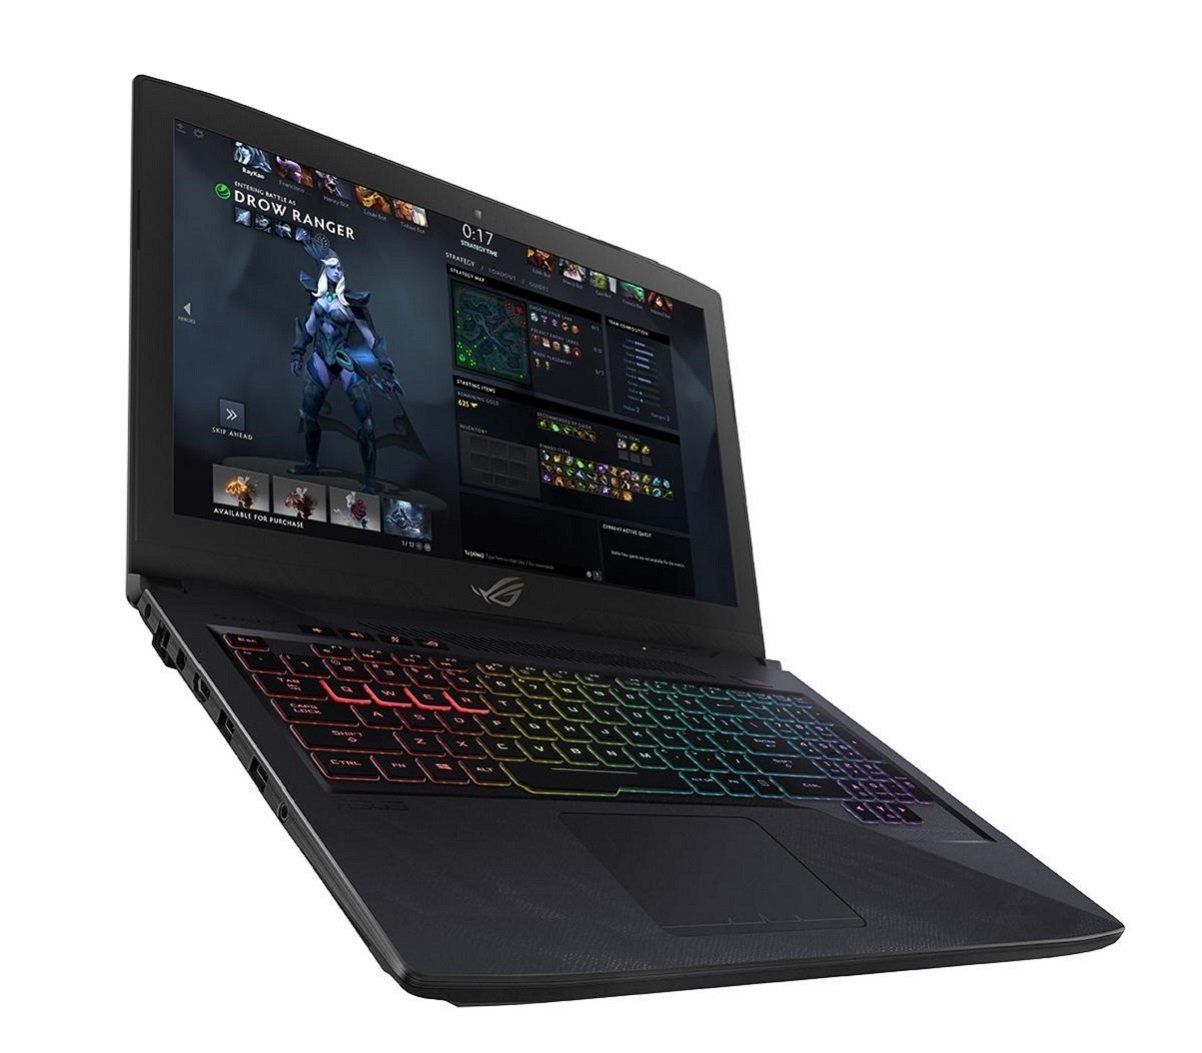 Køb ASUS ROG Strix 15.6-inch Laptop GL503VM-FY022T (Black) - (Intel i7-7700HQ Nvidia GTX 1060 6GB GDDR5 Graphics, 8GB RAM, 1TB HDD + SSD, RGB Keyboard)